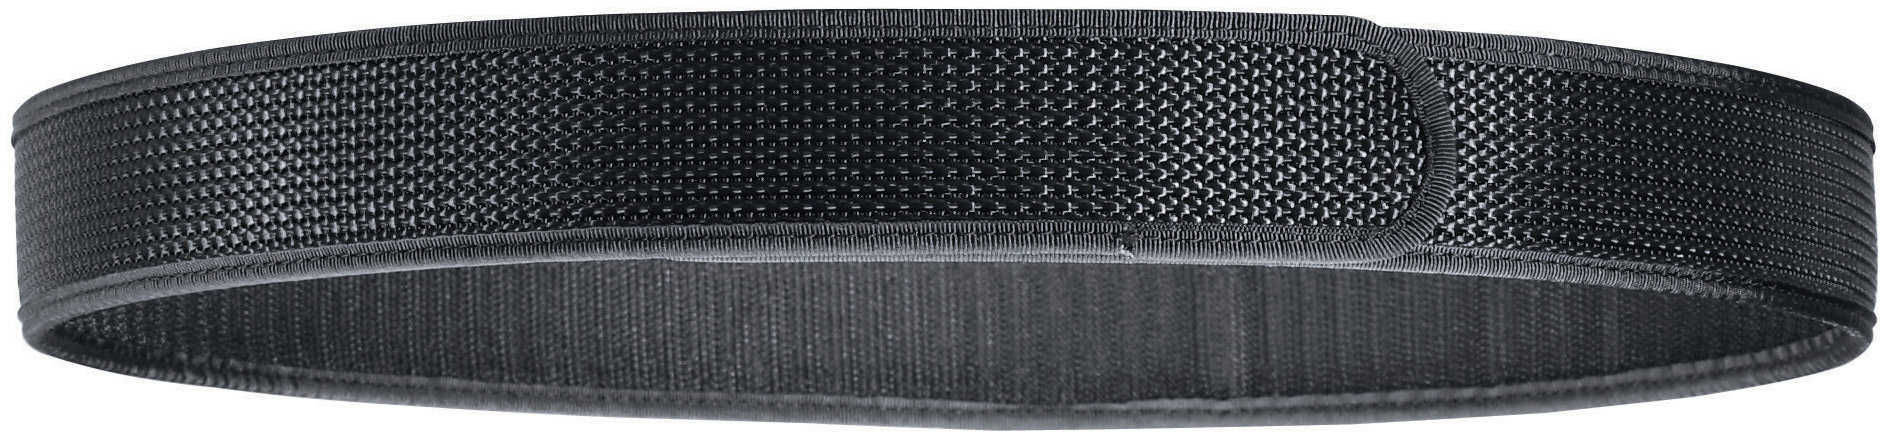 Bianchi Model 7205 Liner Belt 1.5" Size 28-34" Small Hook and Loop Closure Nylon Black Finish 17706